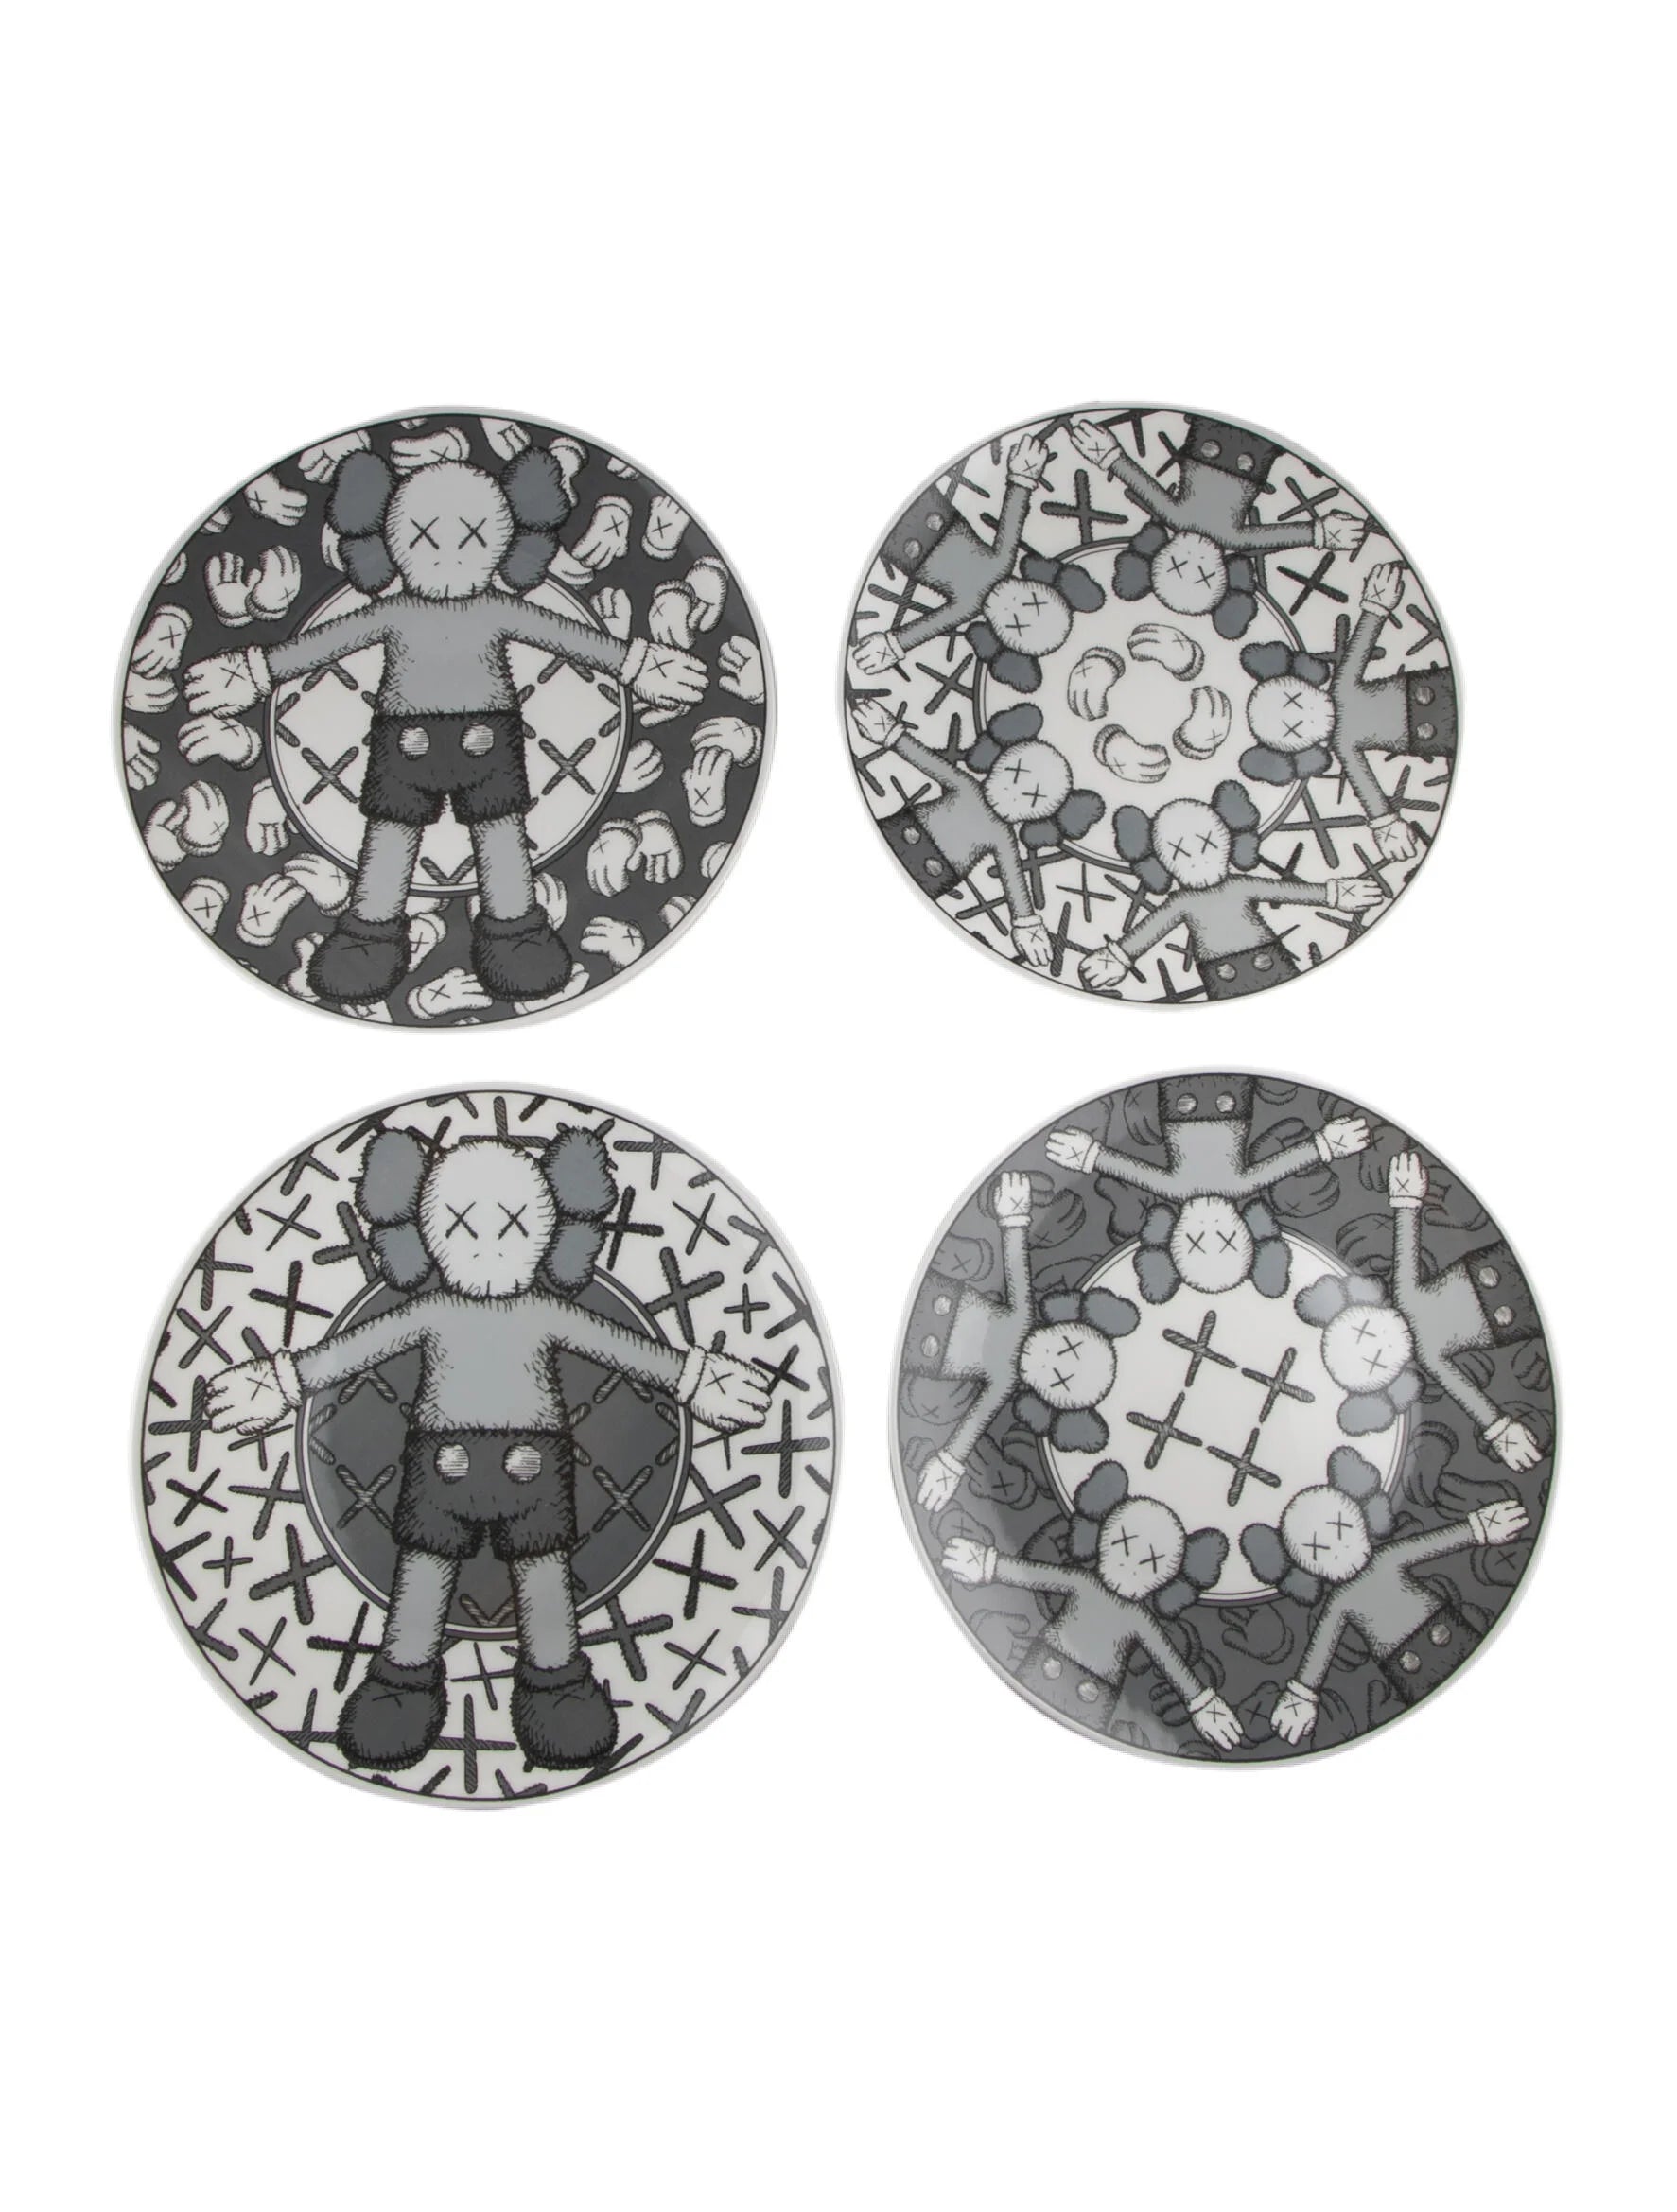 KAWS x NGV Ceramic Plates (Set of 4)